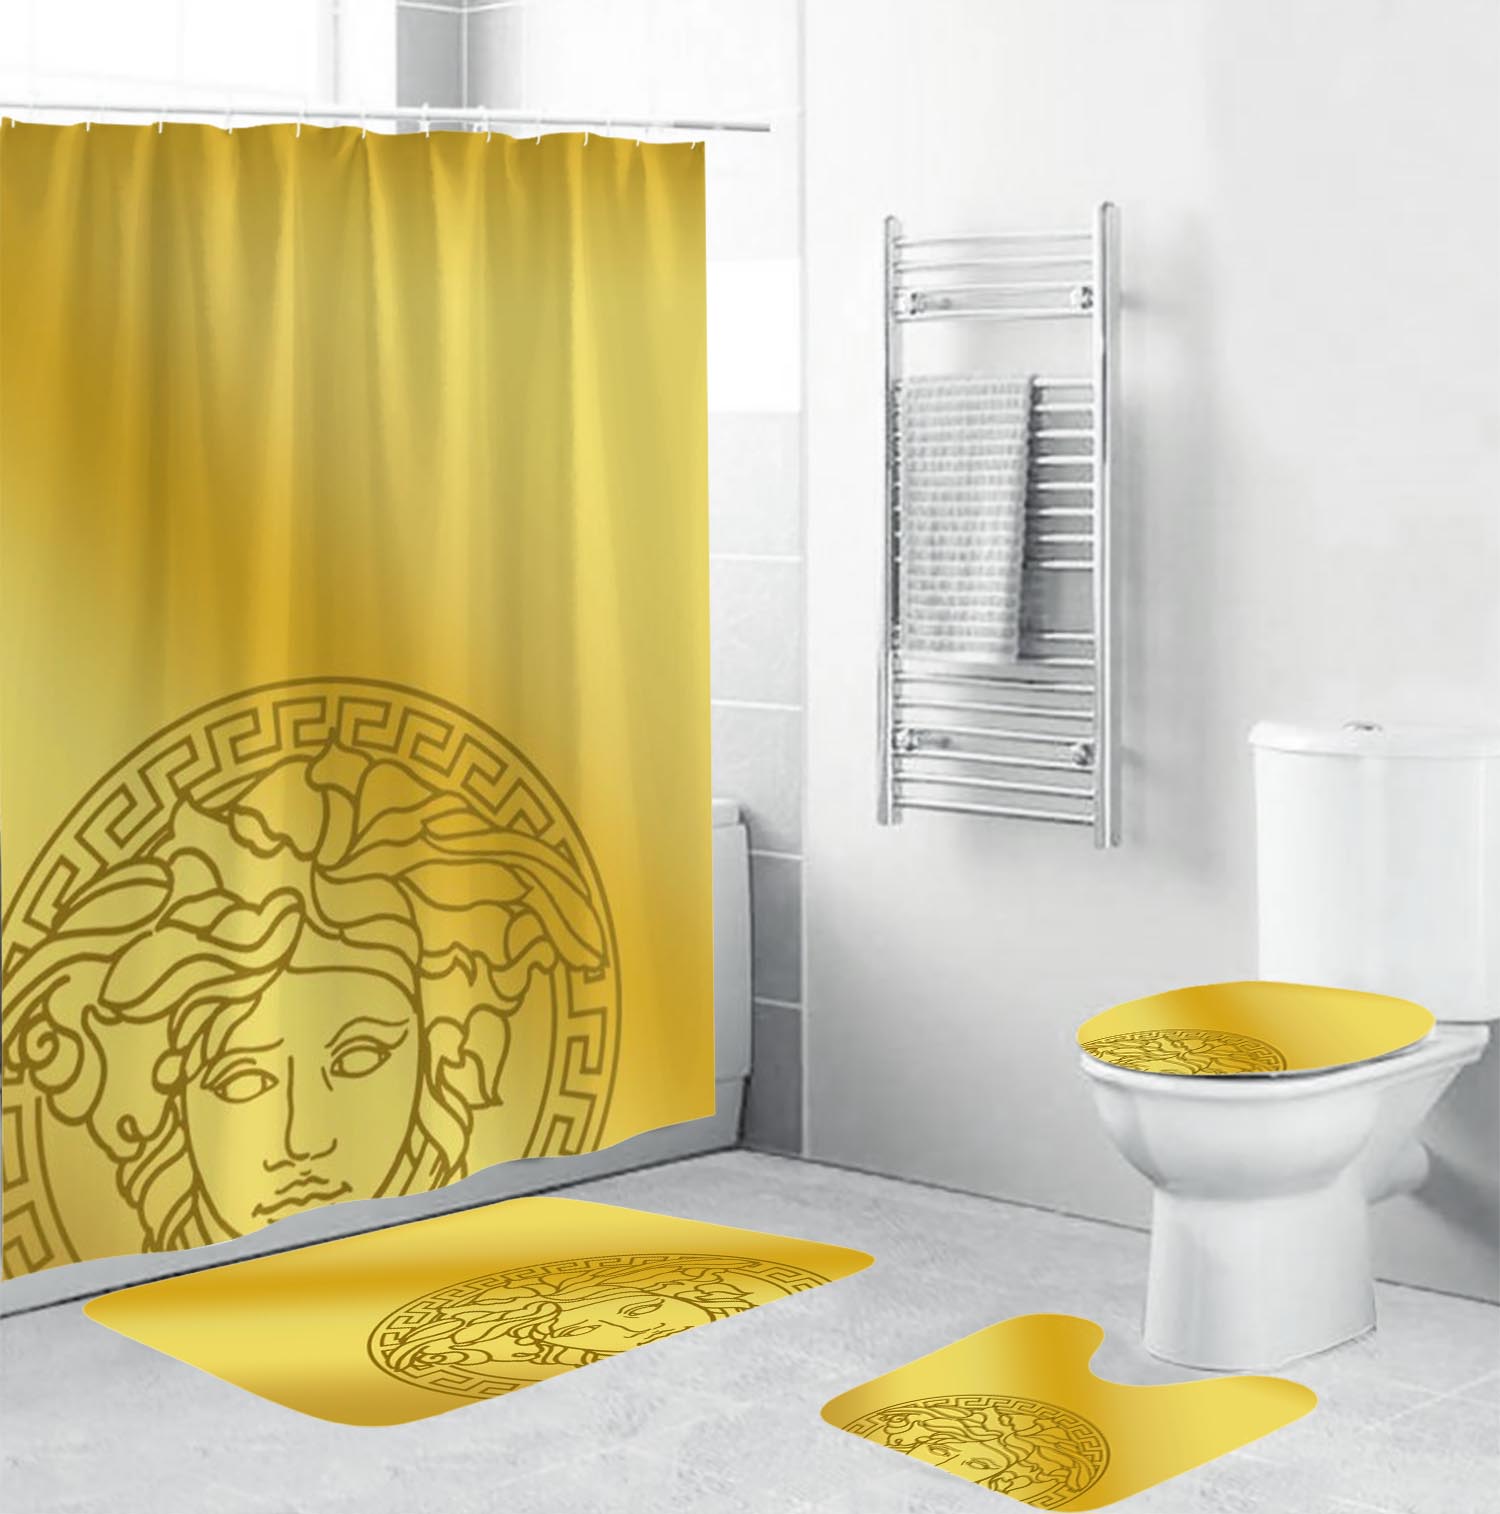 Gianni Versace Gold Bathroom Set Luxury Fashion Brand Bath Mat Hypebeast Home Decor